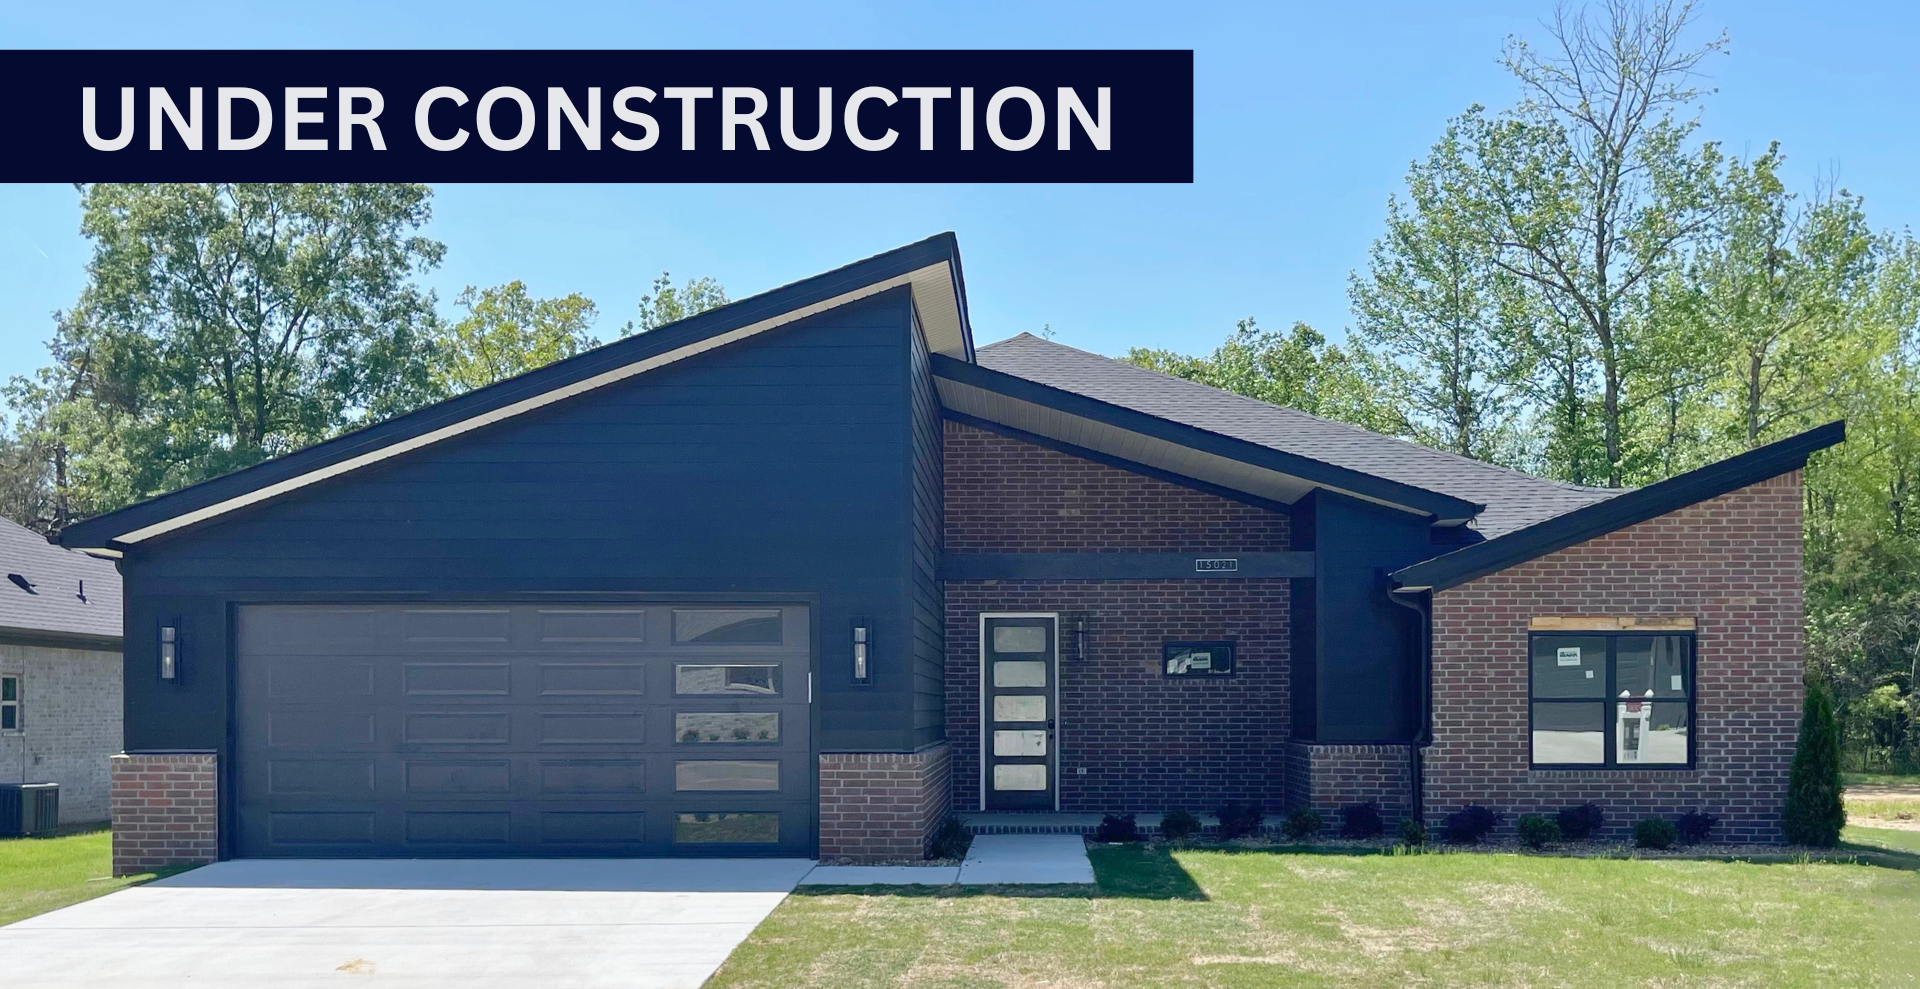 Modern new construction home with black garage door and dark brick exterior